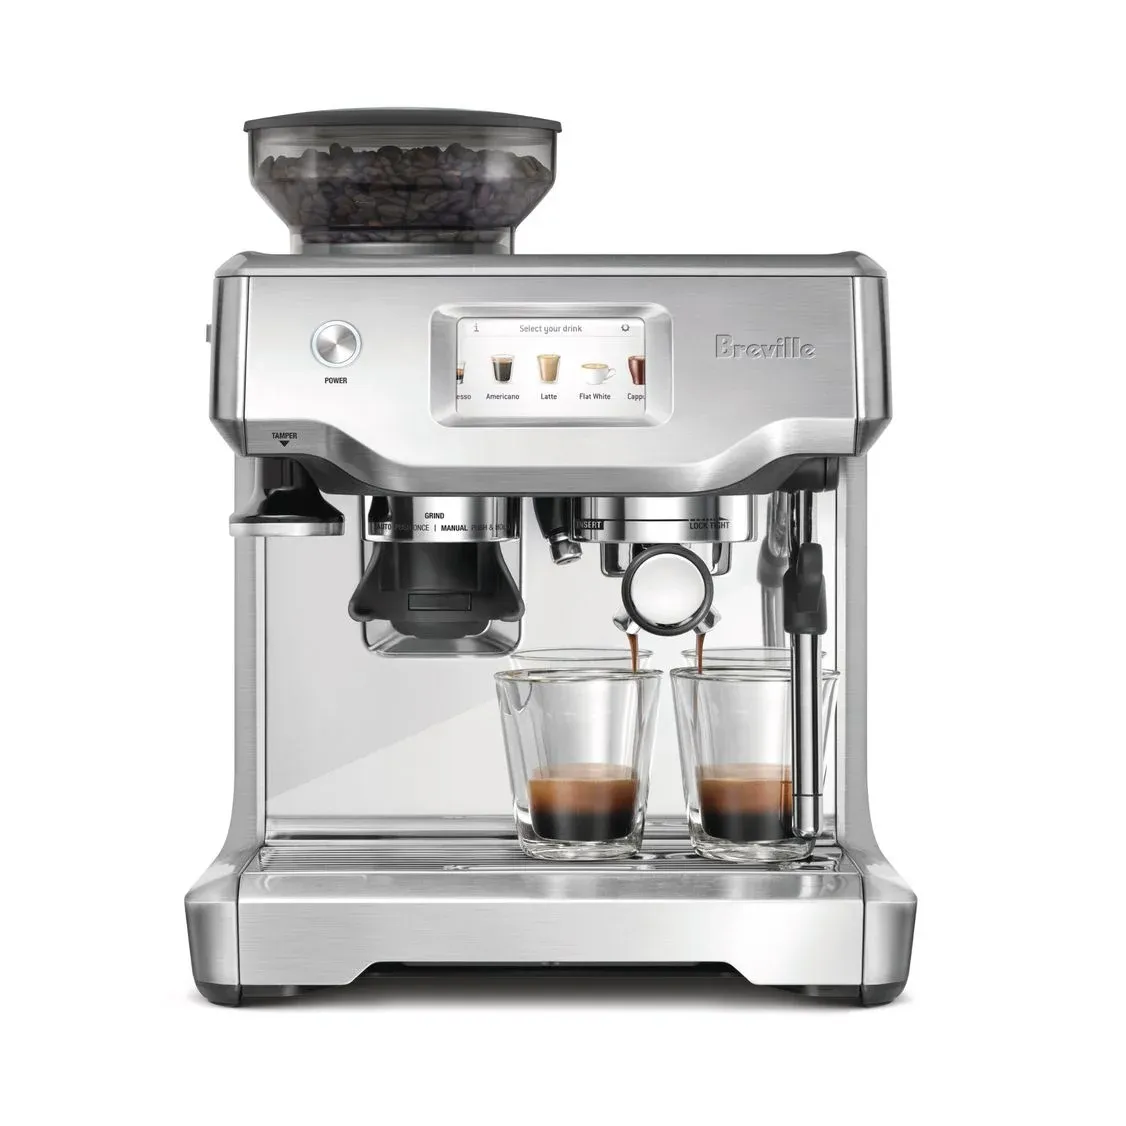 Breville Philippines espresso machine features